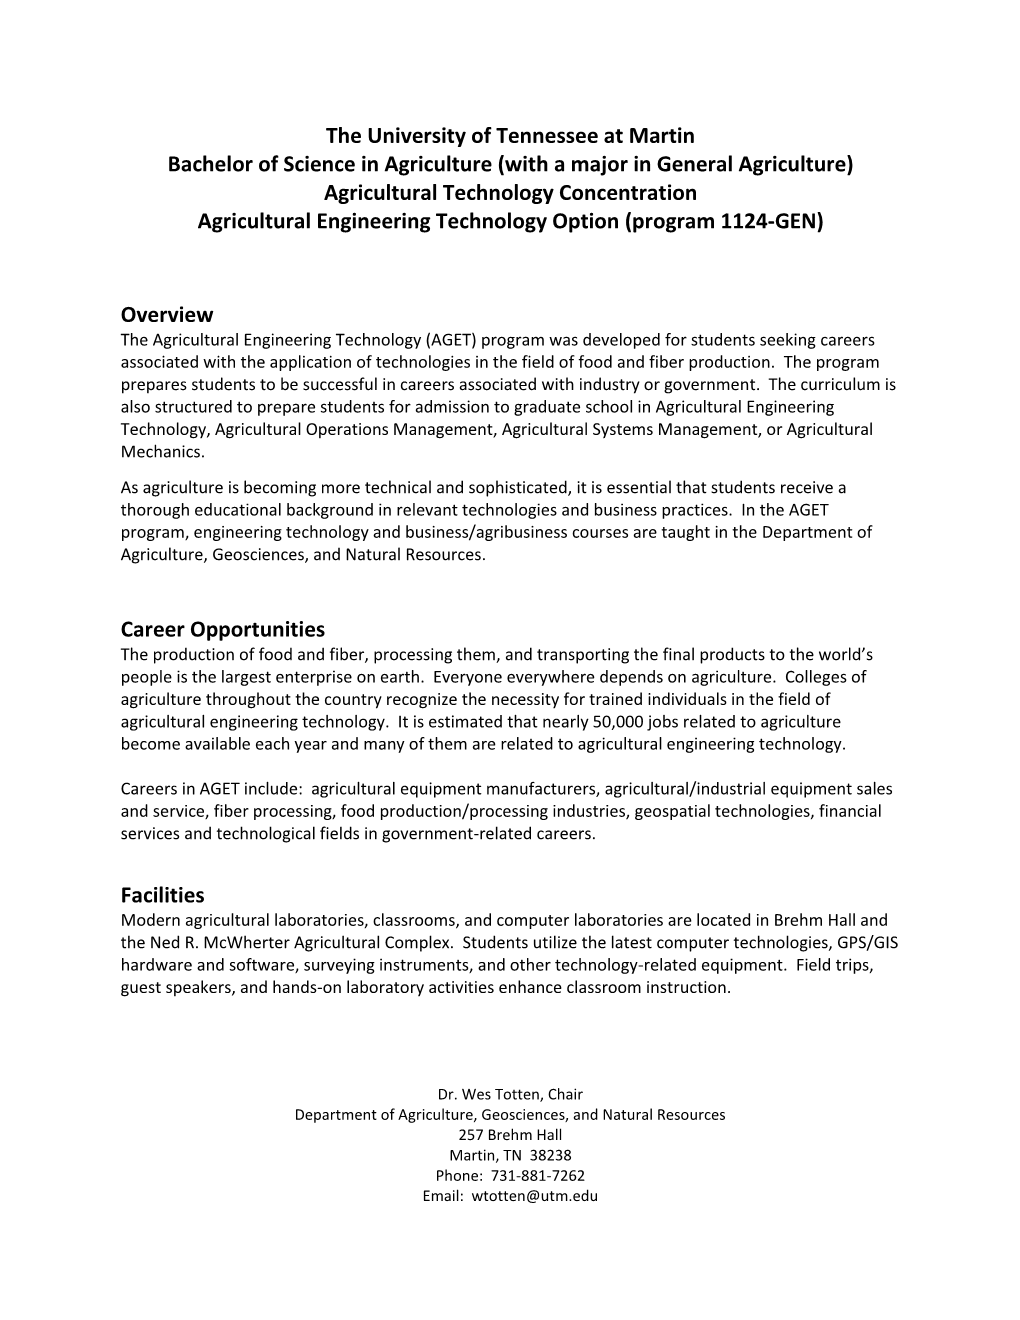 Agricultural Engineering Technology Option (Program 1124-GEN)